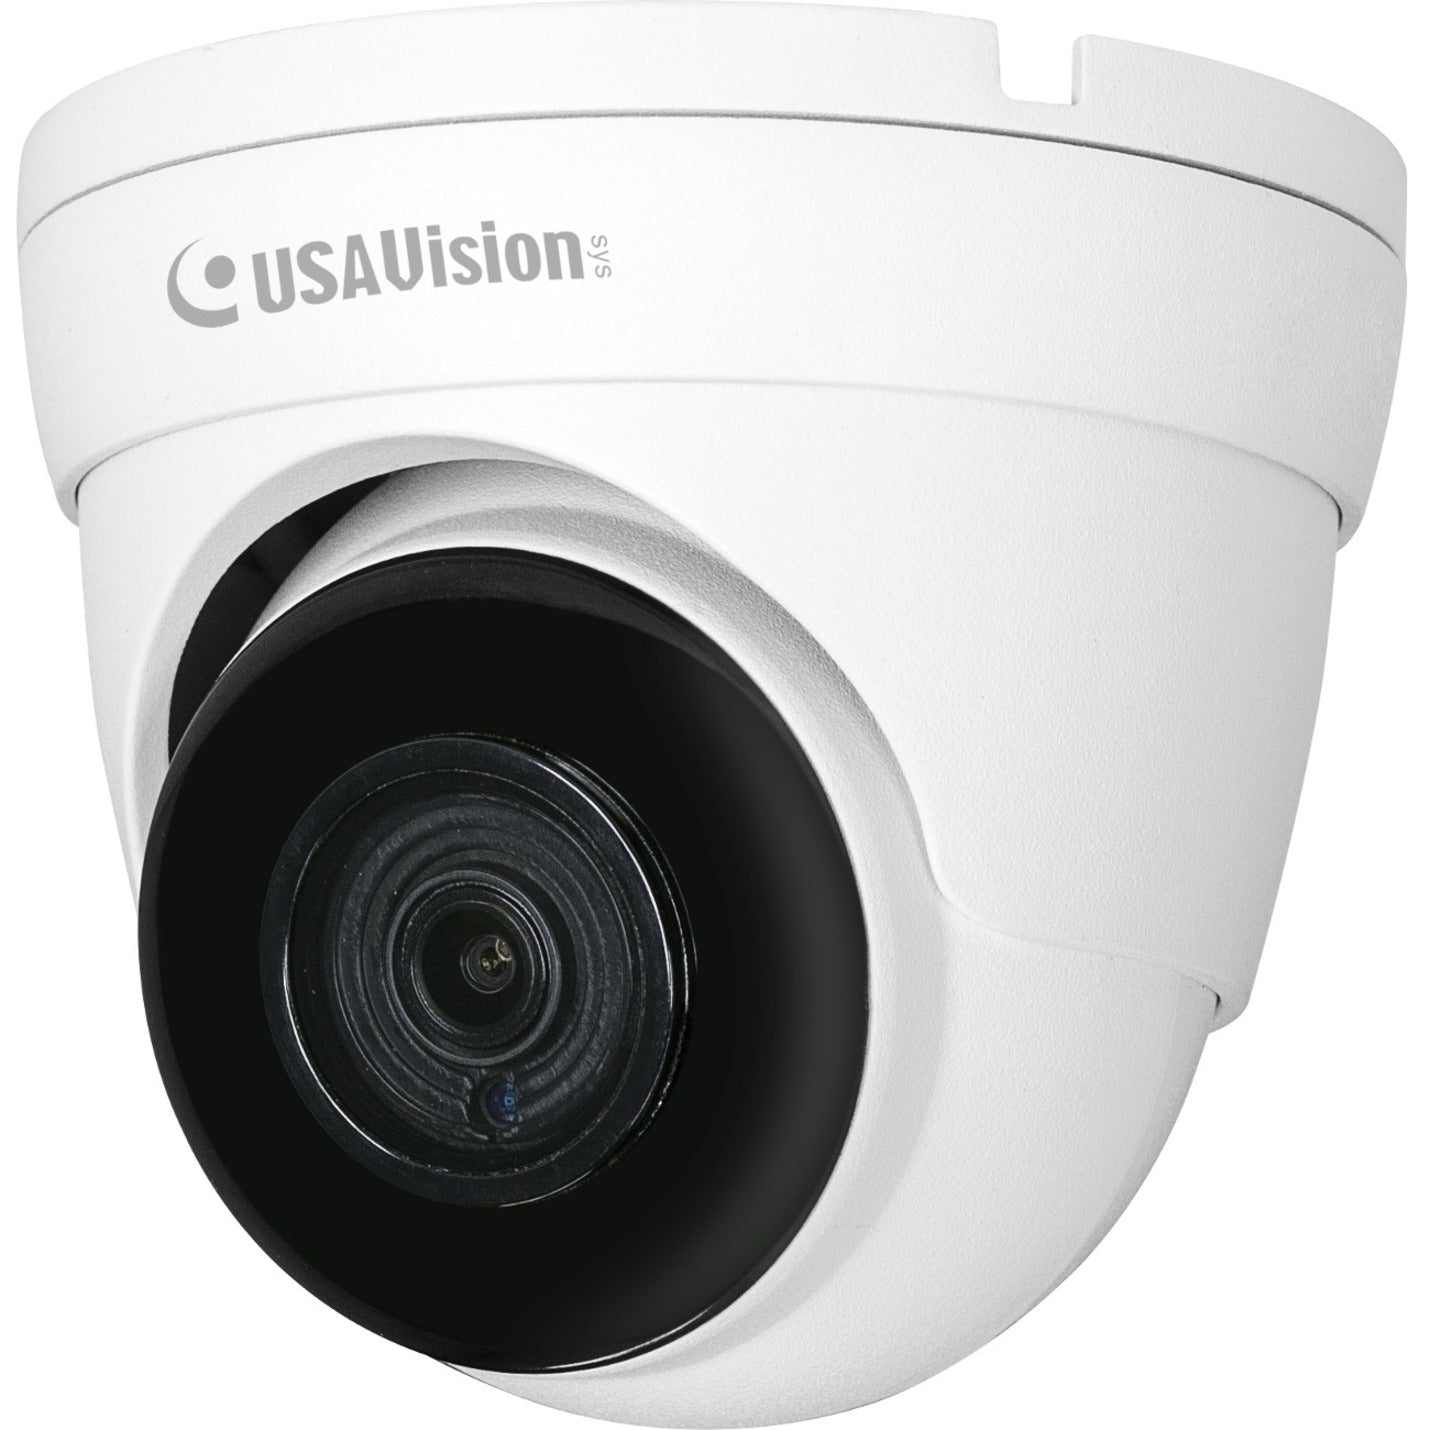 GeoVision UA-CR510F2 5MP Super Low Lux IR Eyeball Dome Camera, Outdoor Surveillance Camera with 2.8mm Lens, 30fps, 2592 x 1944 Resolution